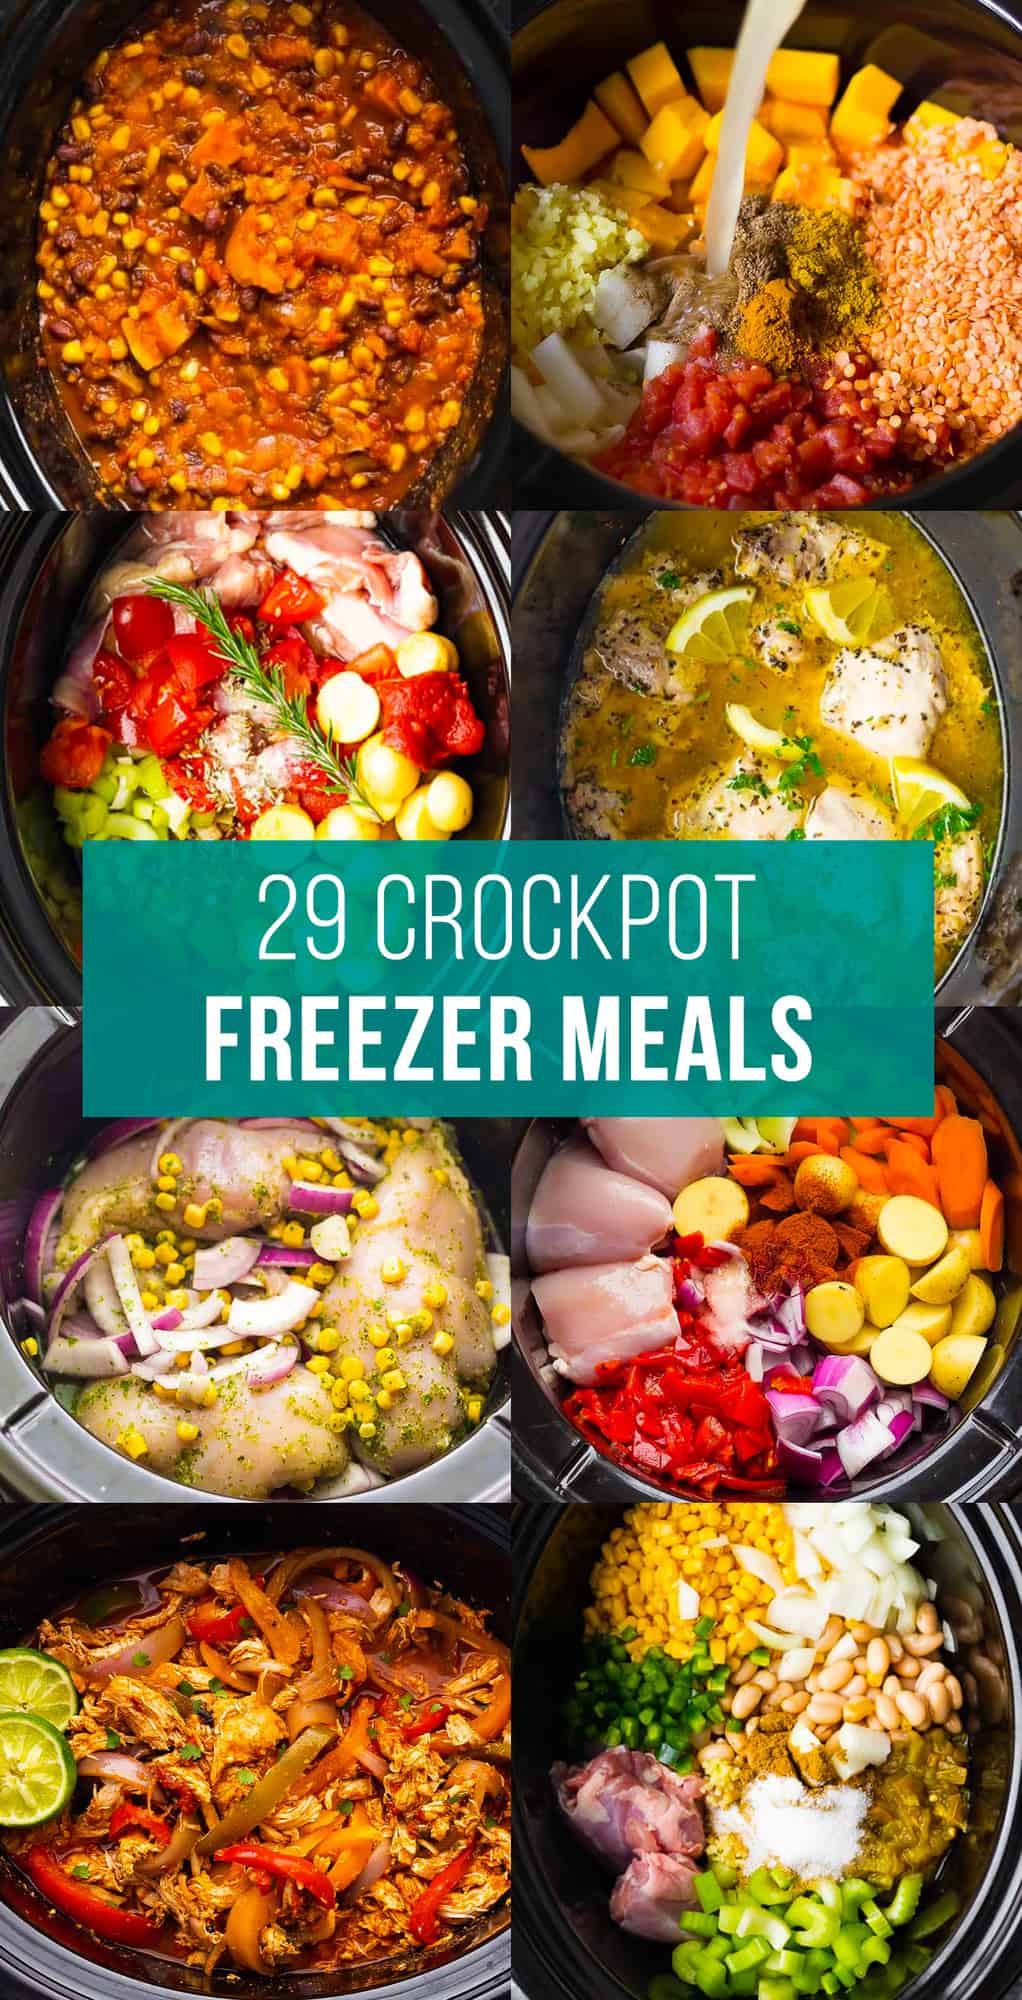 https://sweetpeasandsaffron.com/wp-content/uploads/2022/02/29-crockpot-freezer-meals.jpg